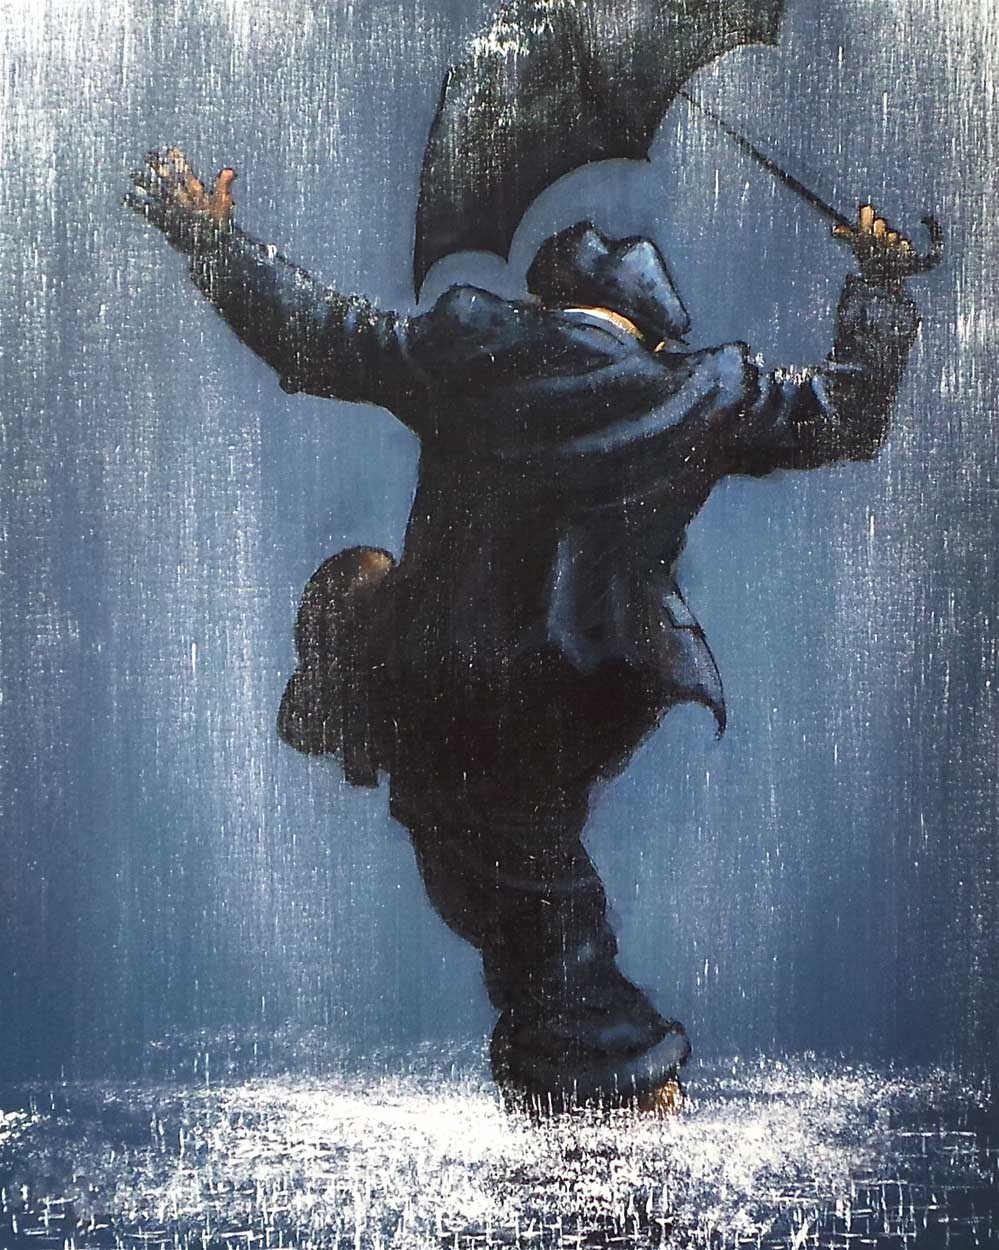 Singing in the Rain by Alexander Millar